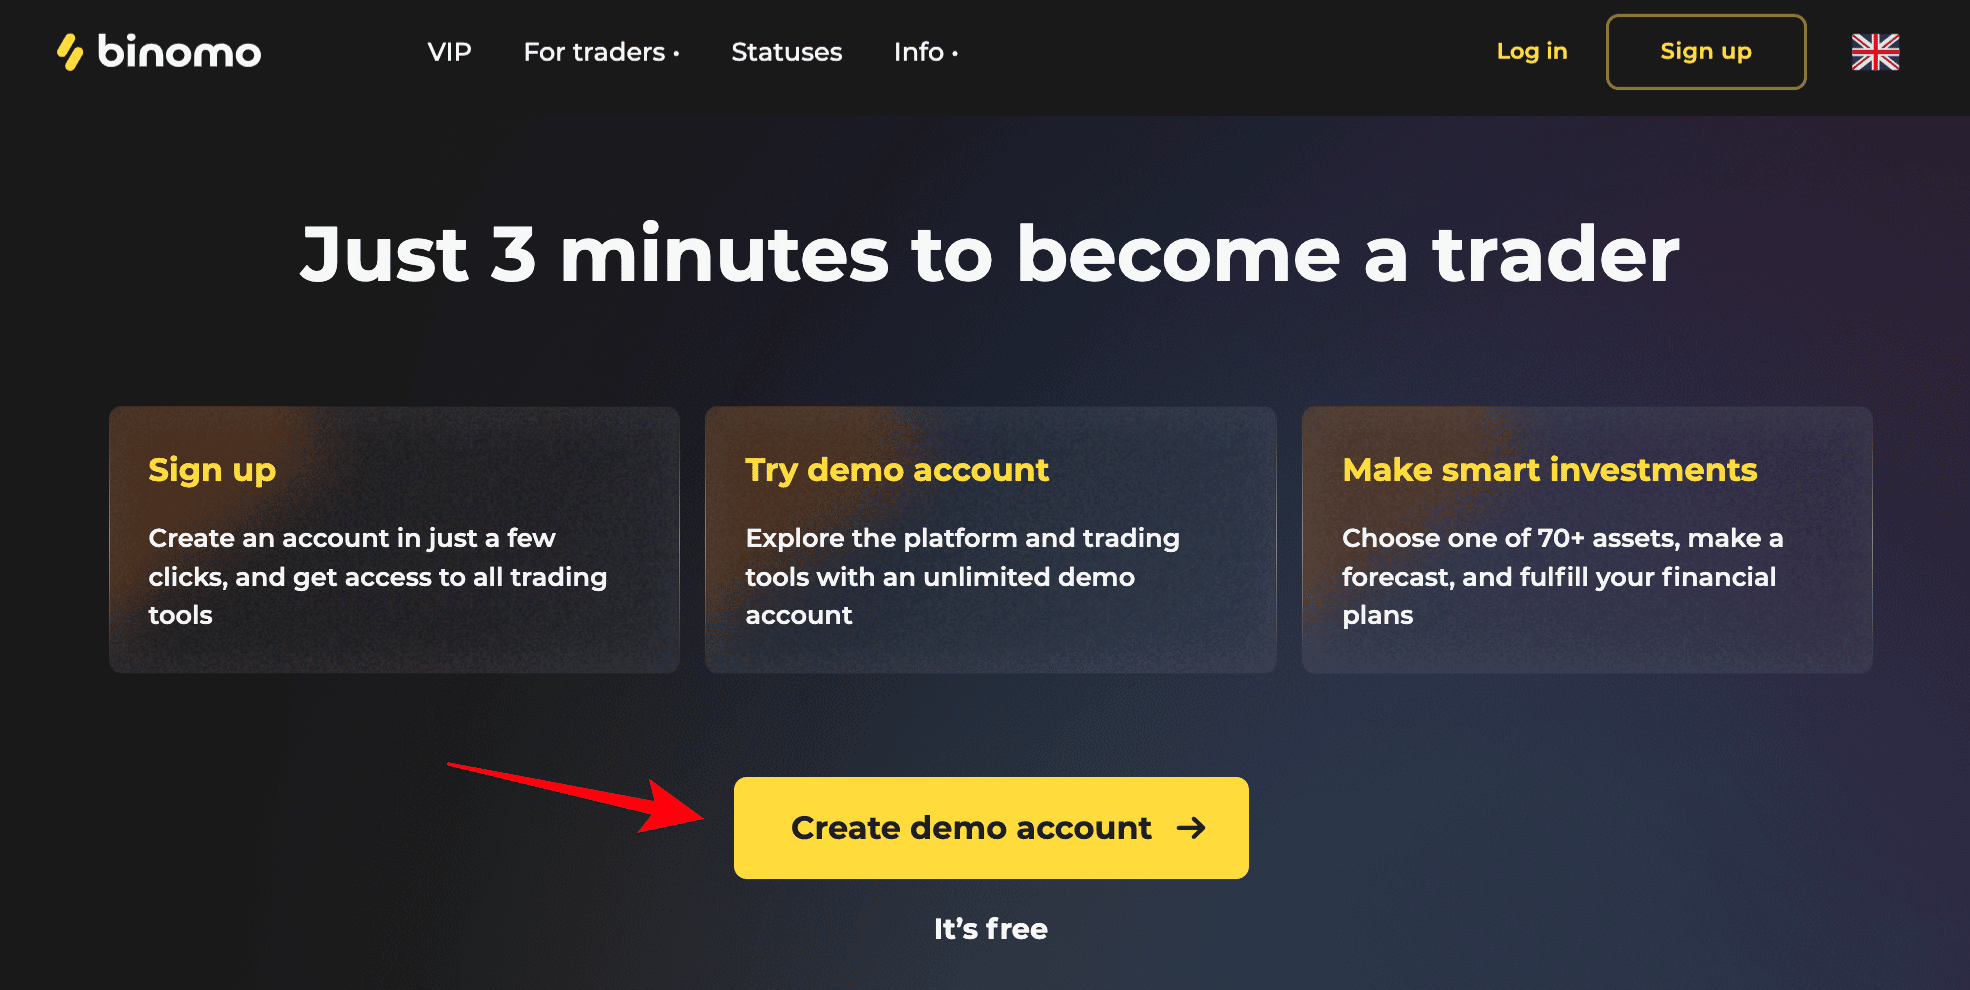 How to create a free risk-free demo account on Binomo